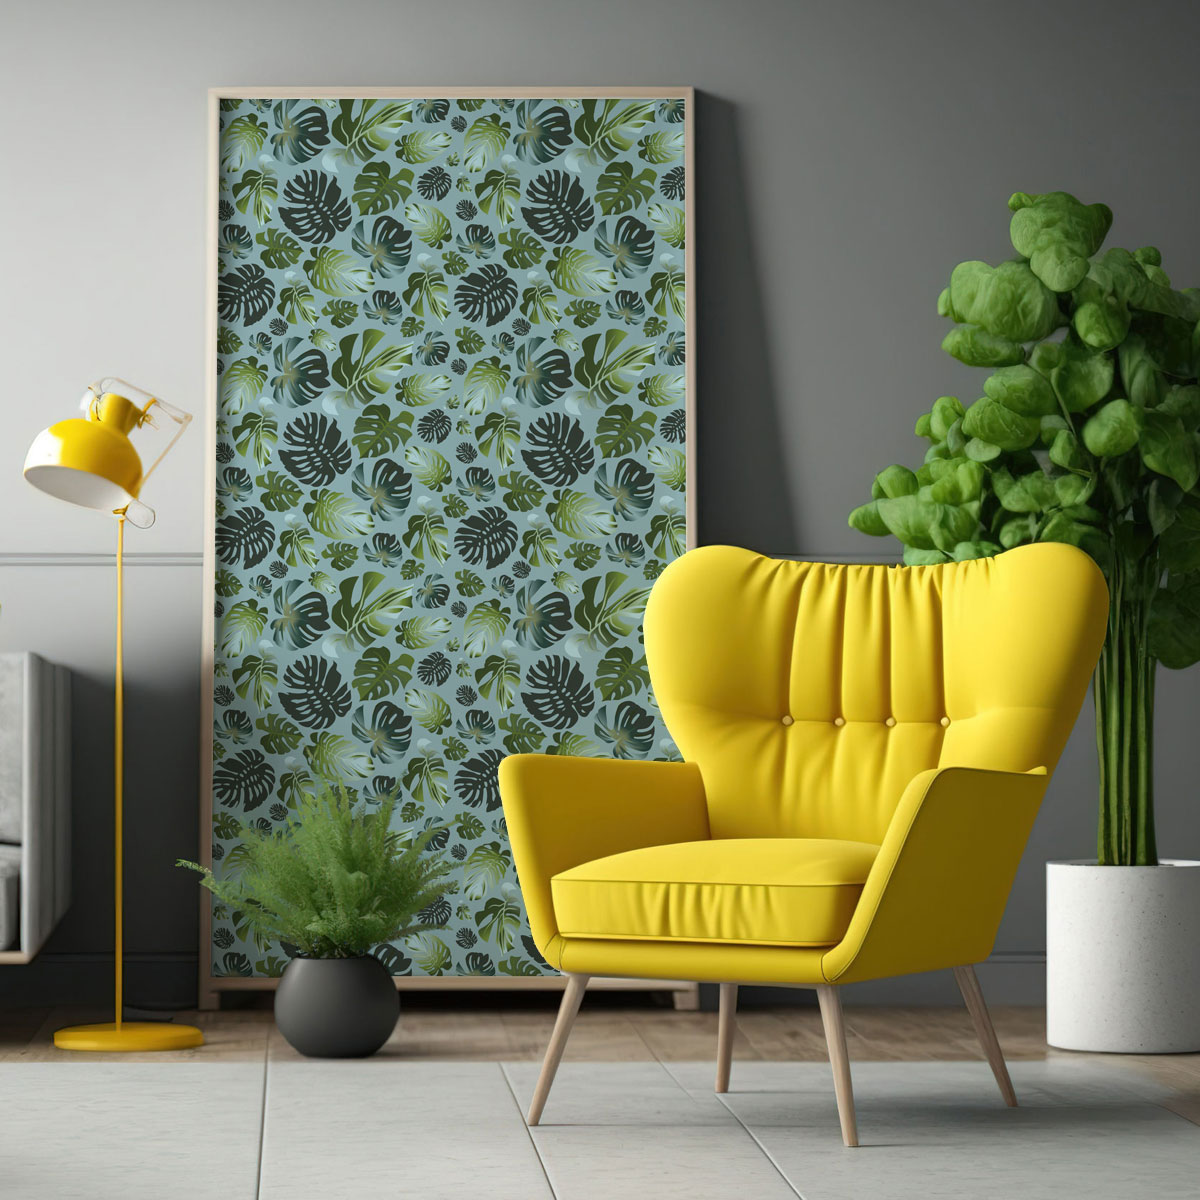 Adhésif meuble motif végétal Feuillage monstera fd vert d'eau gris